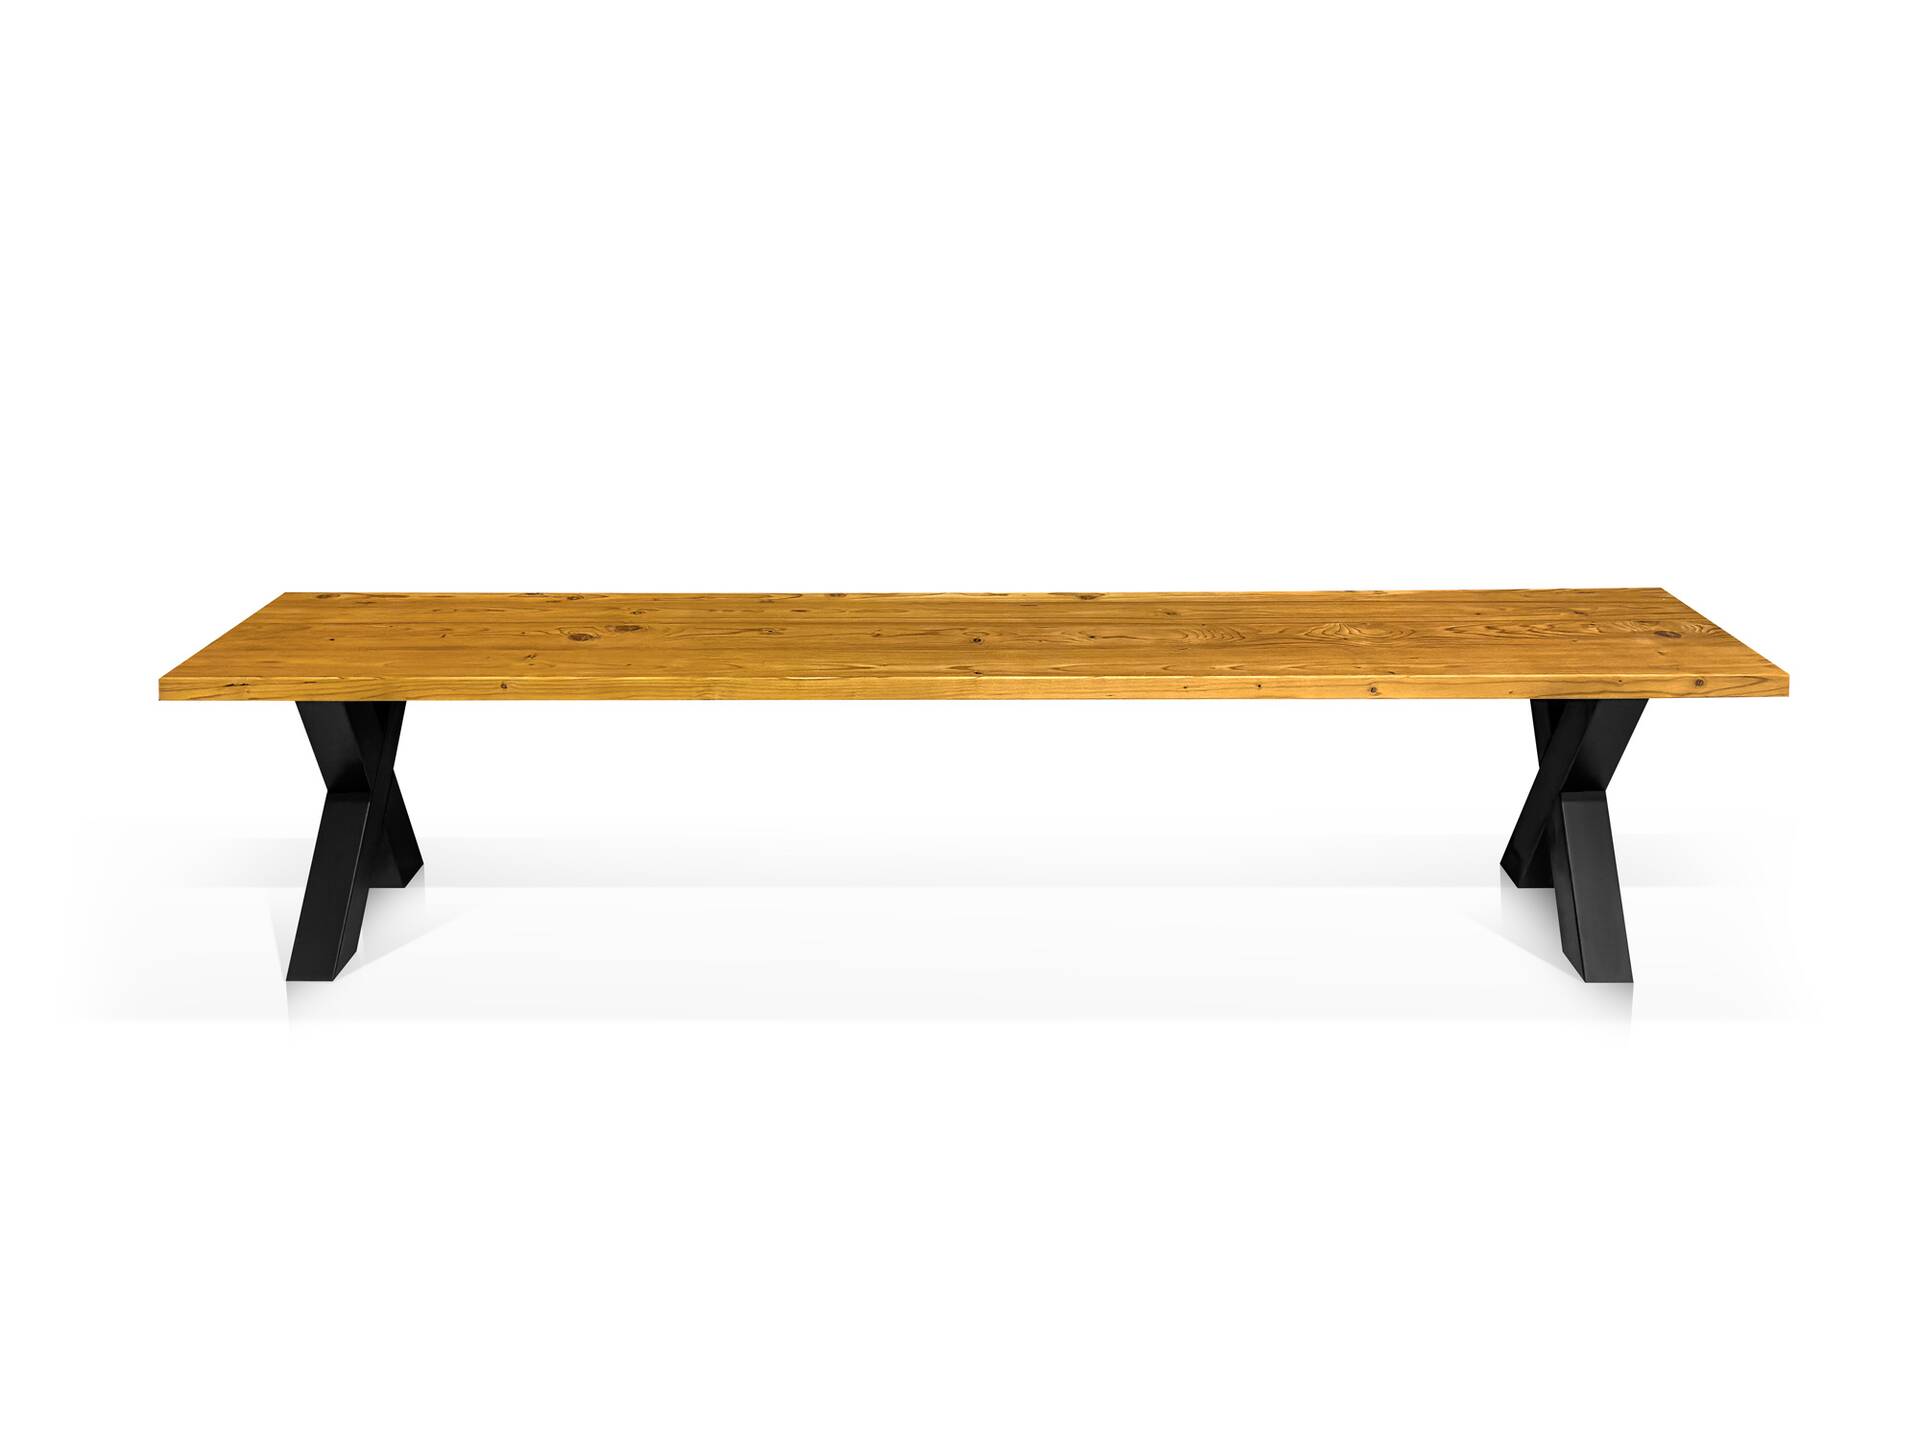 ALABAMA Sitzbank mit X-Beinen, Altholzoptik, Material Massivholz, THERMO-Fichte lackiert 180 cm | ohne Rückenlehne | natur